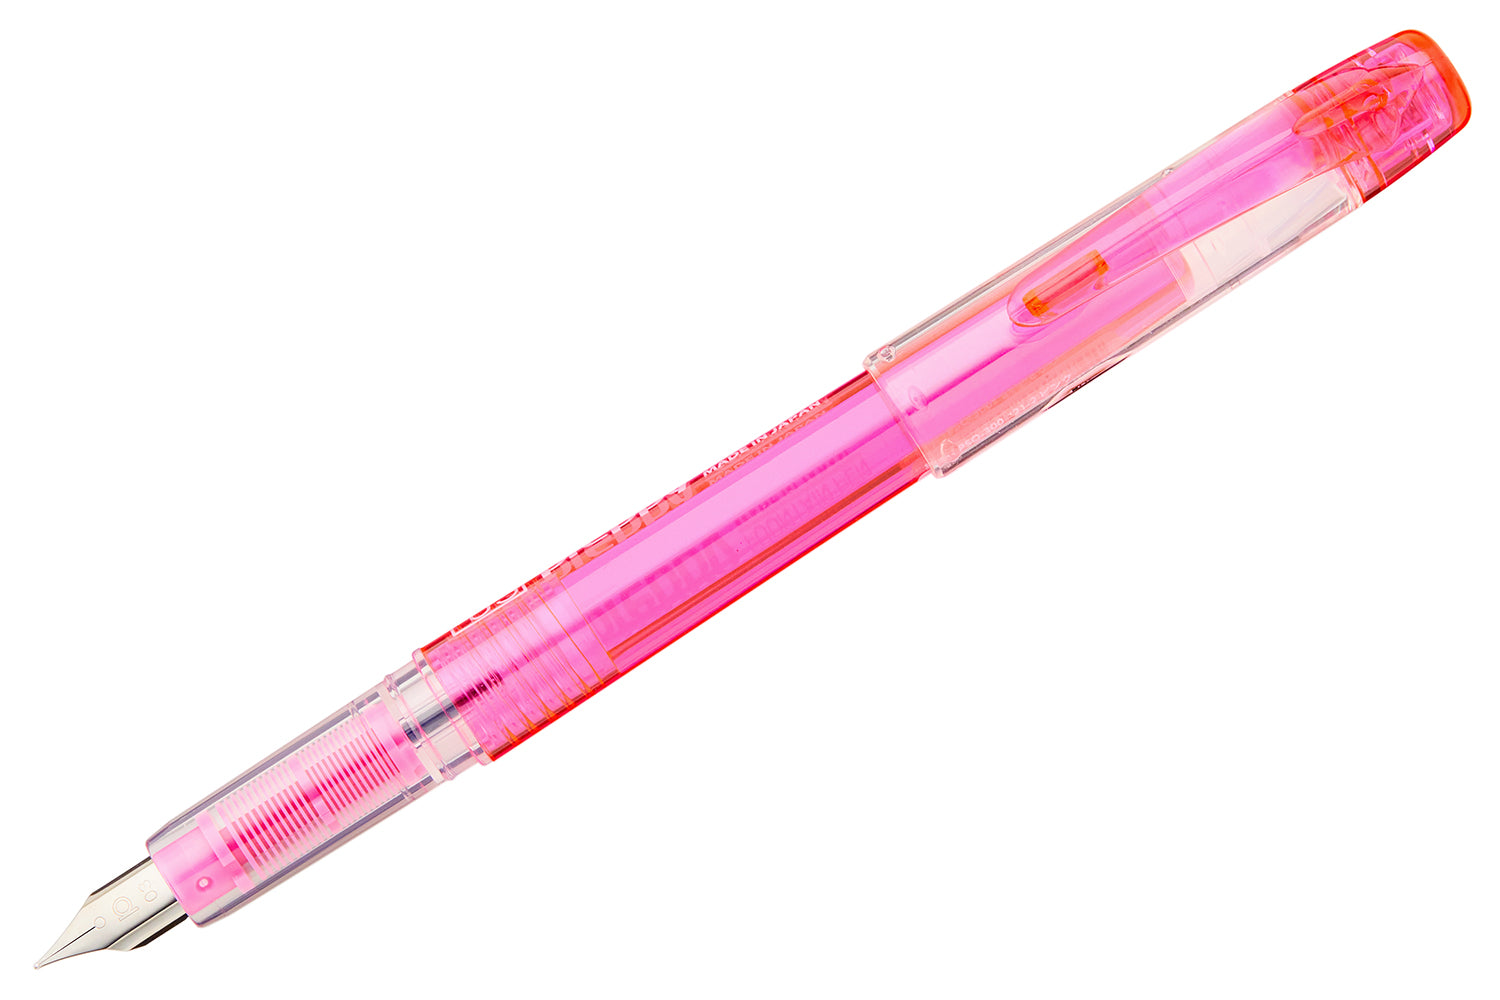 Platinum Preppy Fountain Pen - Pink - Fine